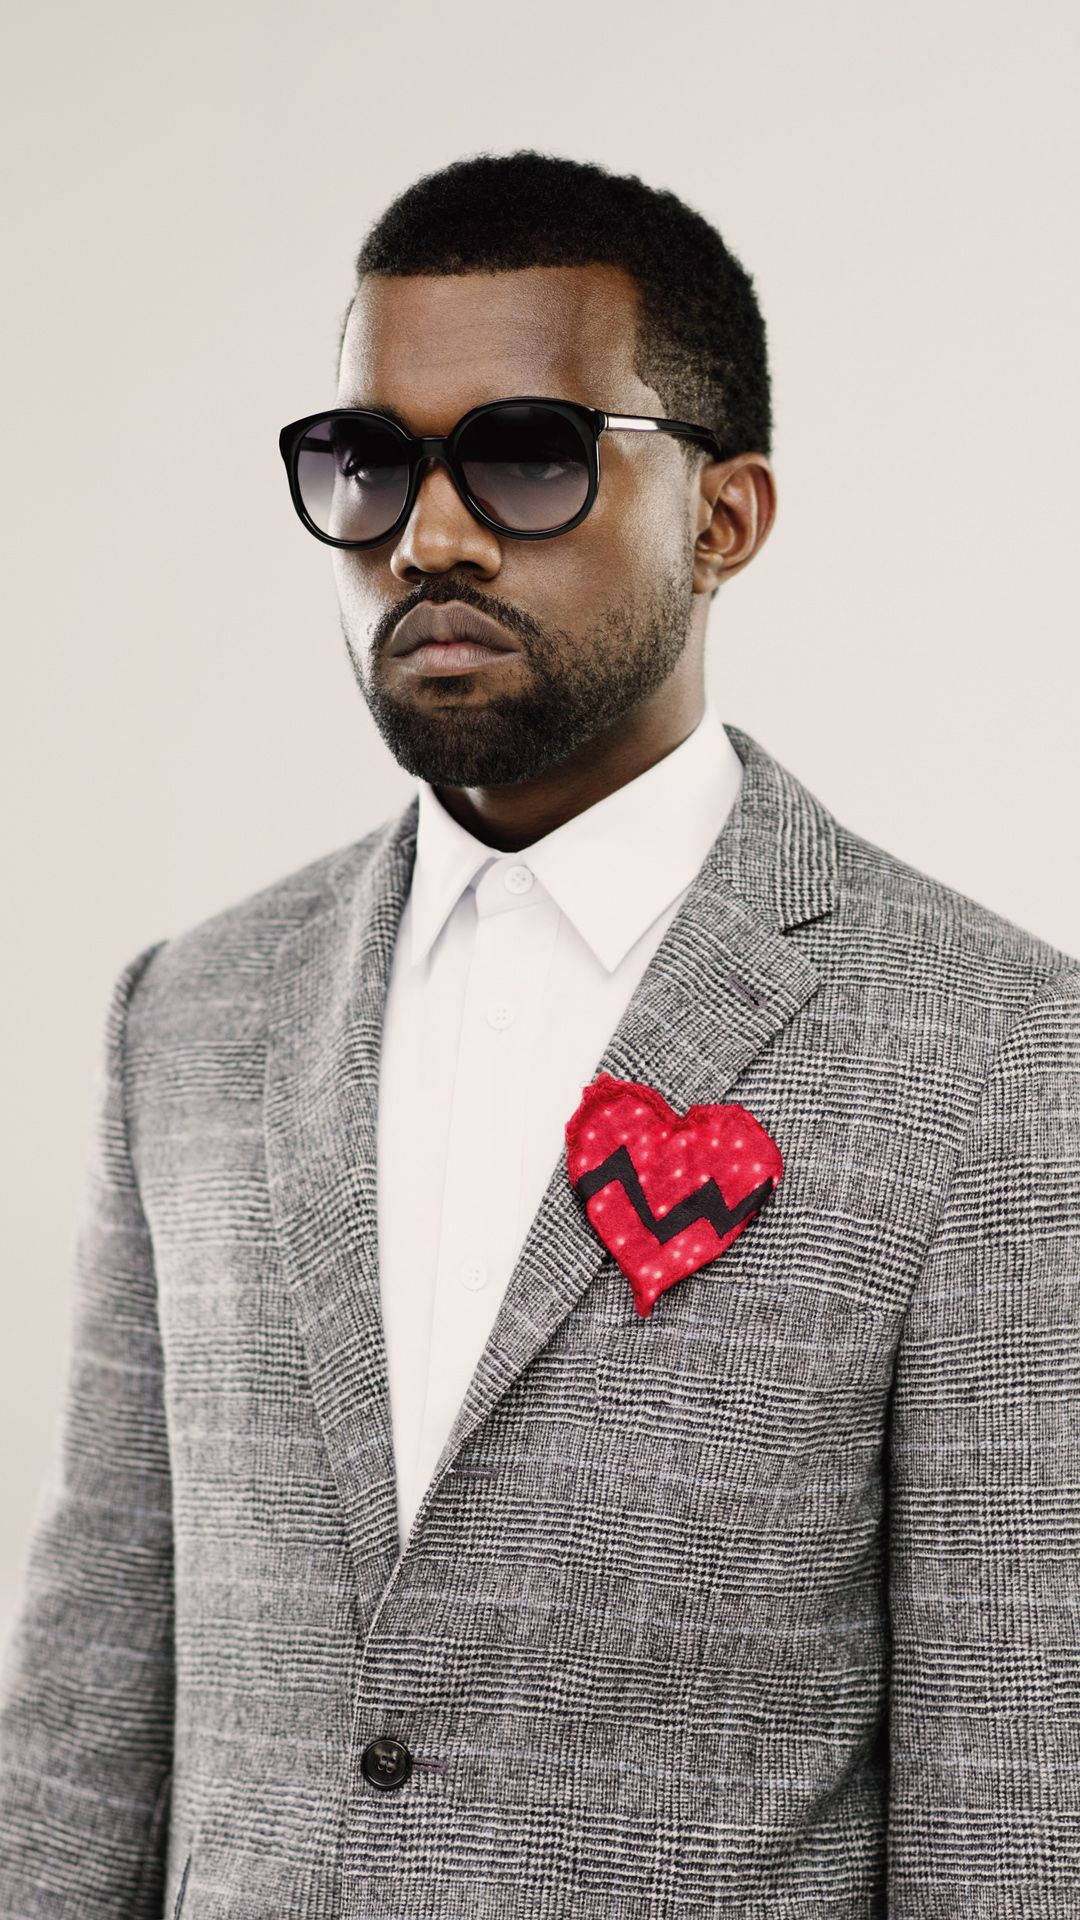 Kanye West Broken Heart Suit Background